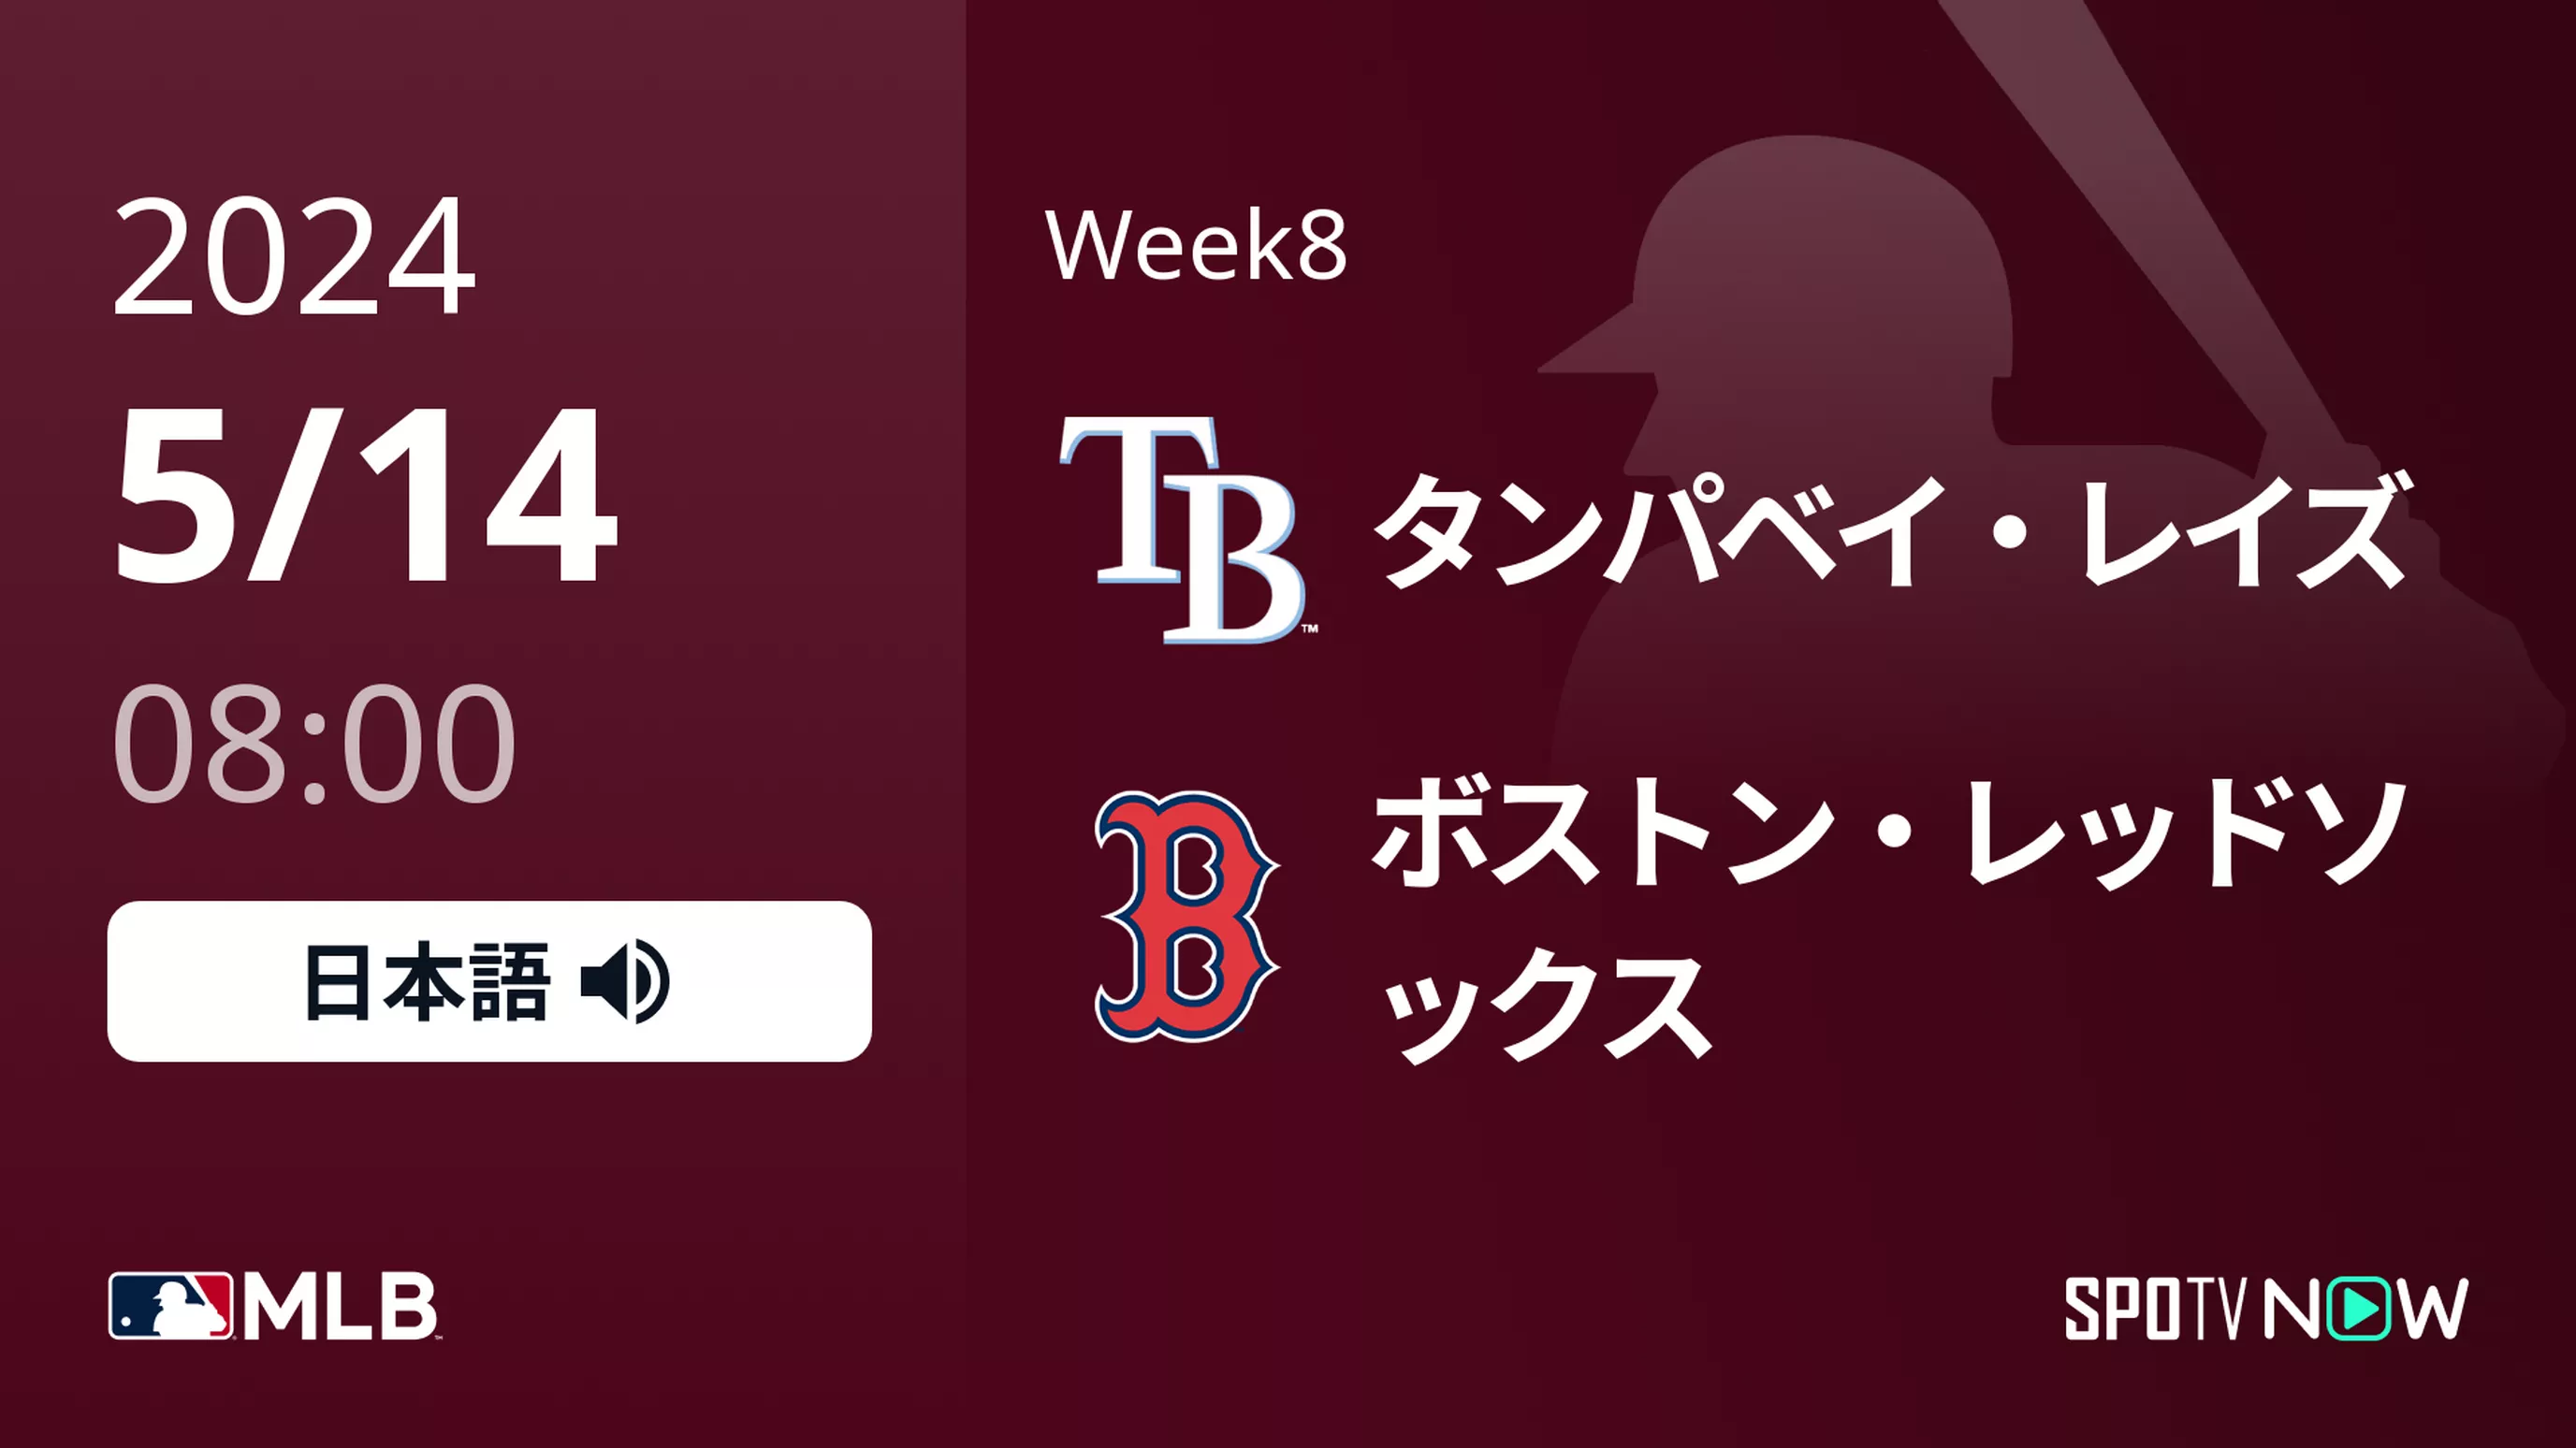 Week8 レイズ vs Rソックス 5/14[MLB]